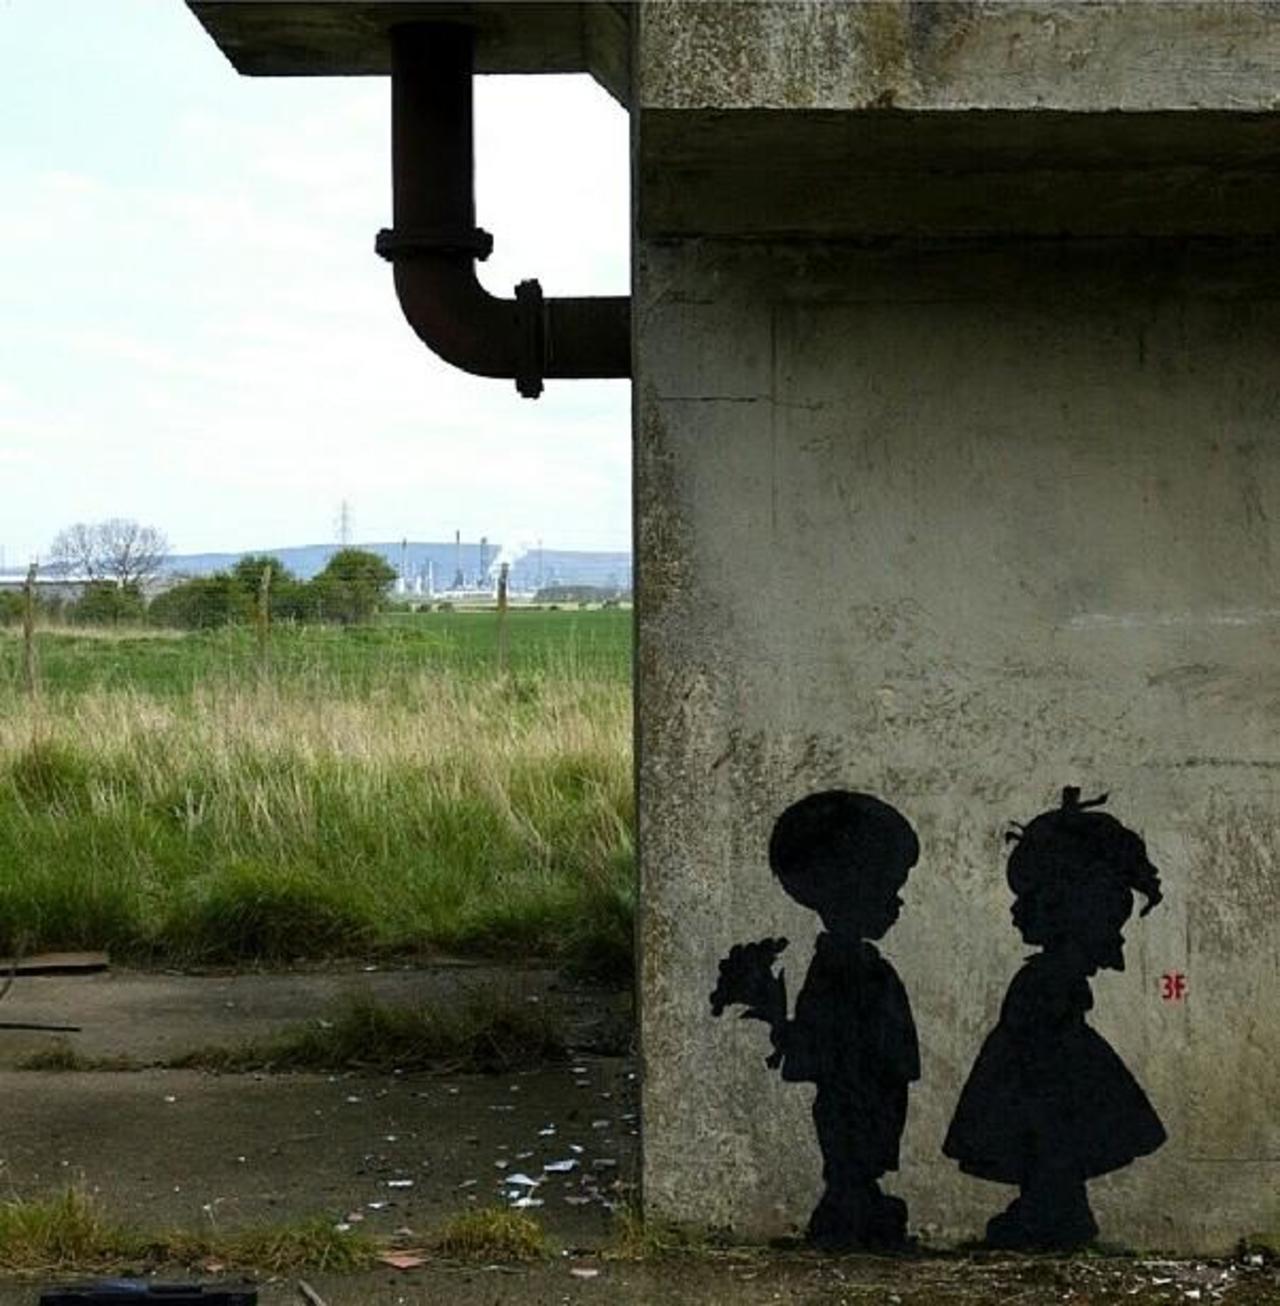 Found love in a hopeless place!

Street Art by 3fountains 

#art #mural #graffiti #streetart http://t.co/go6h7g84Ts